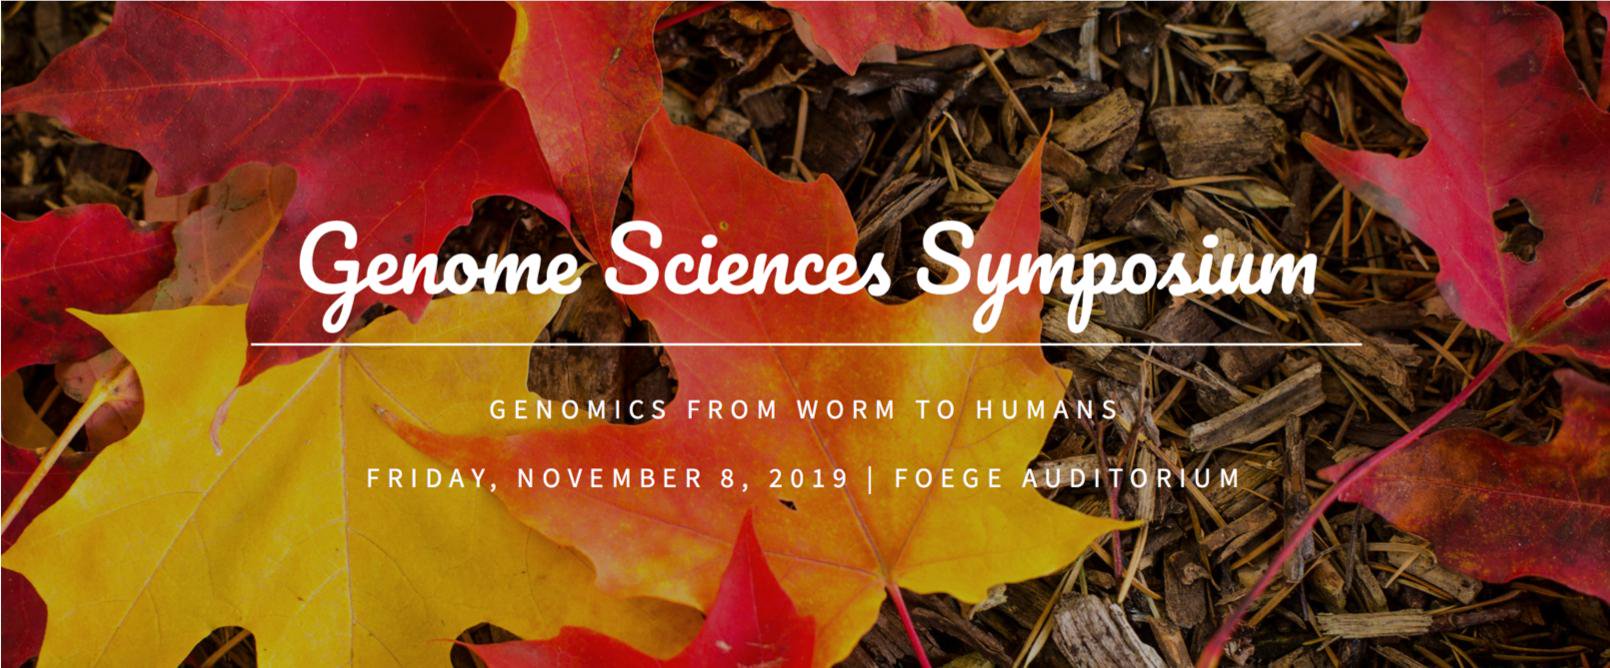 Genome Sciences Symposium